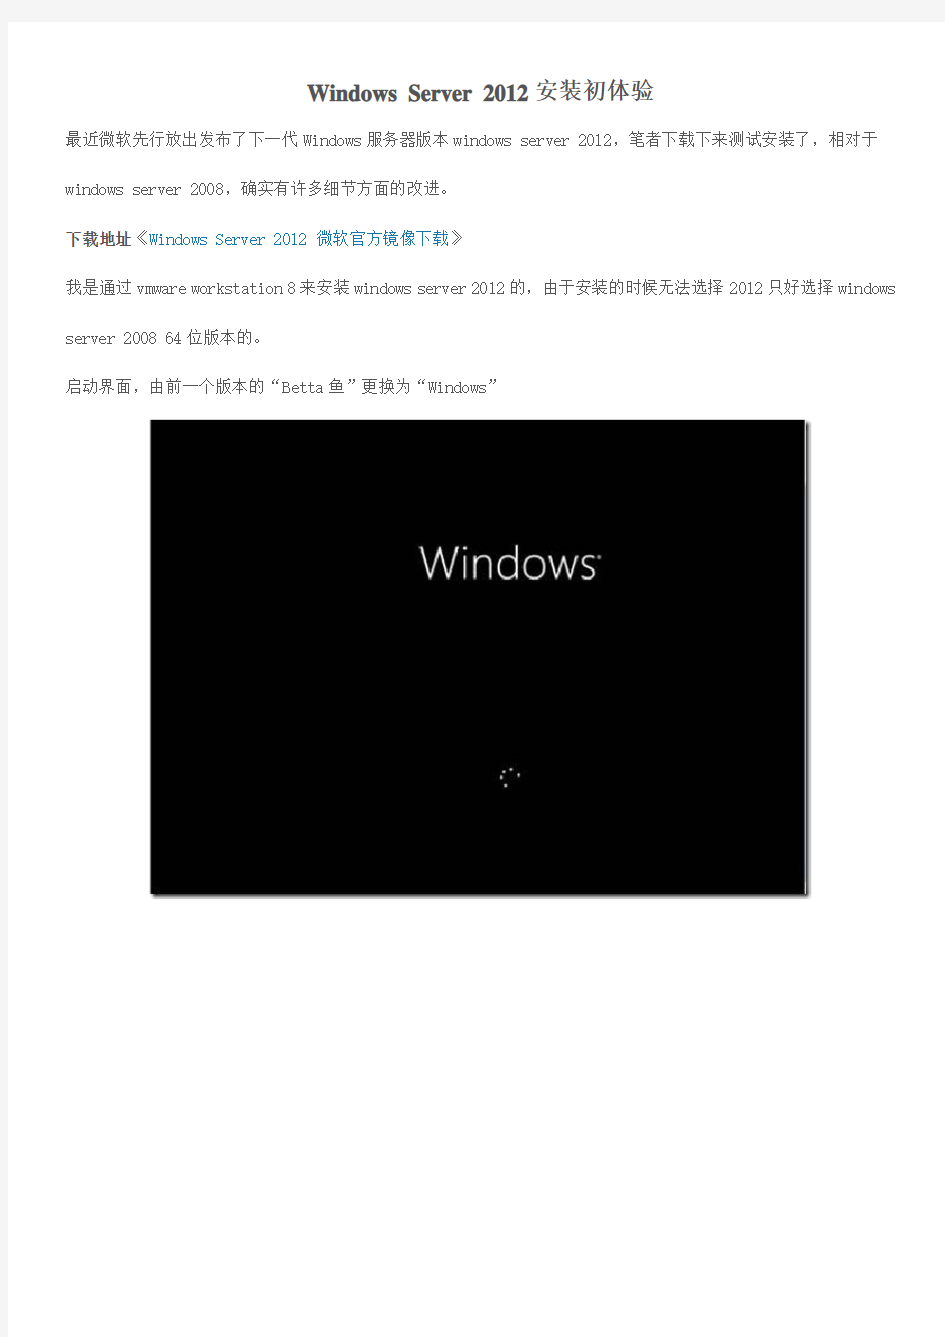 Windows Server 2012微软官方镜像下载、安装说明